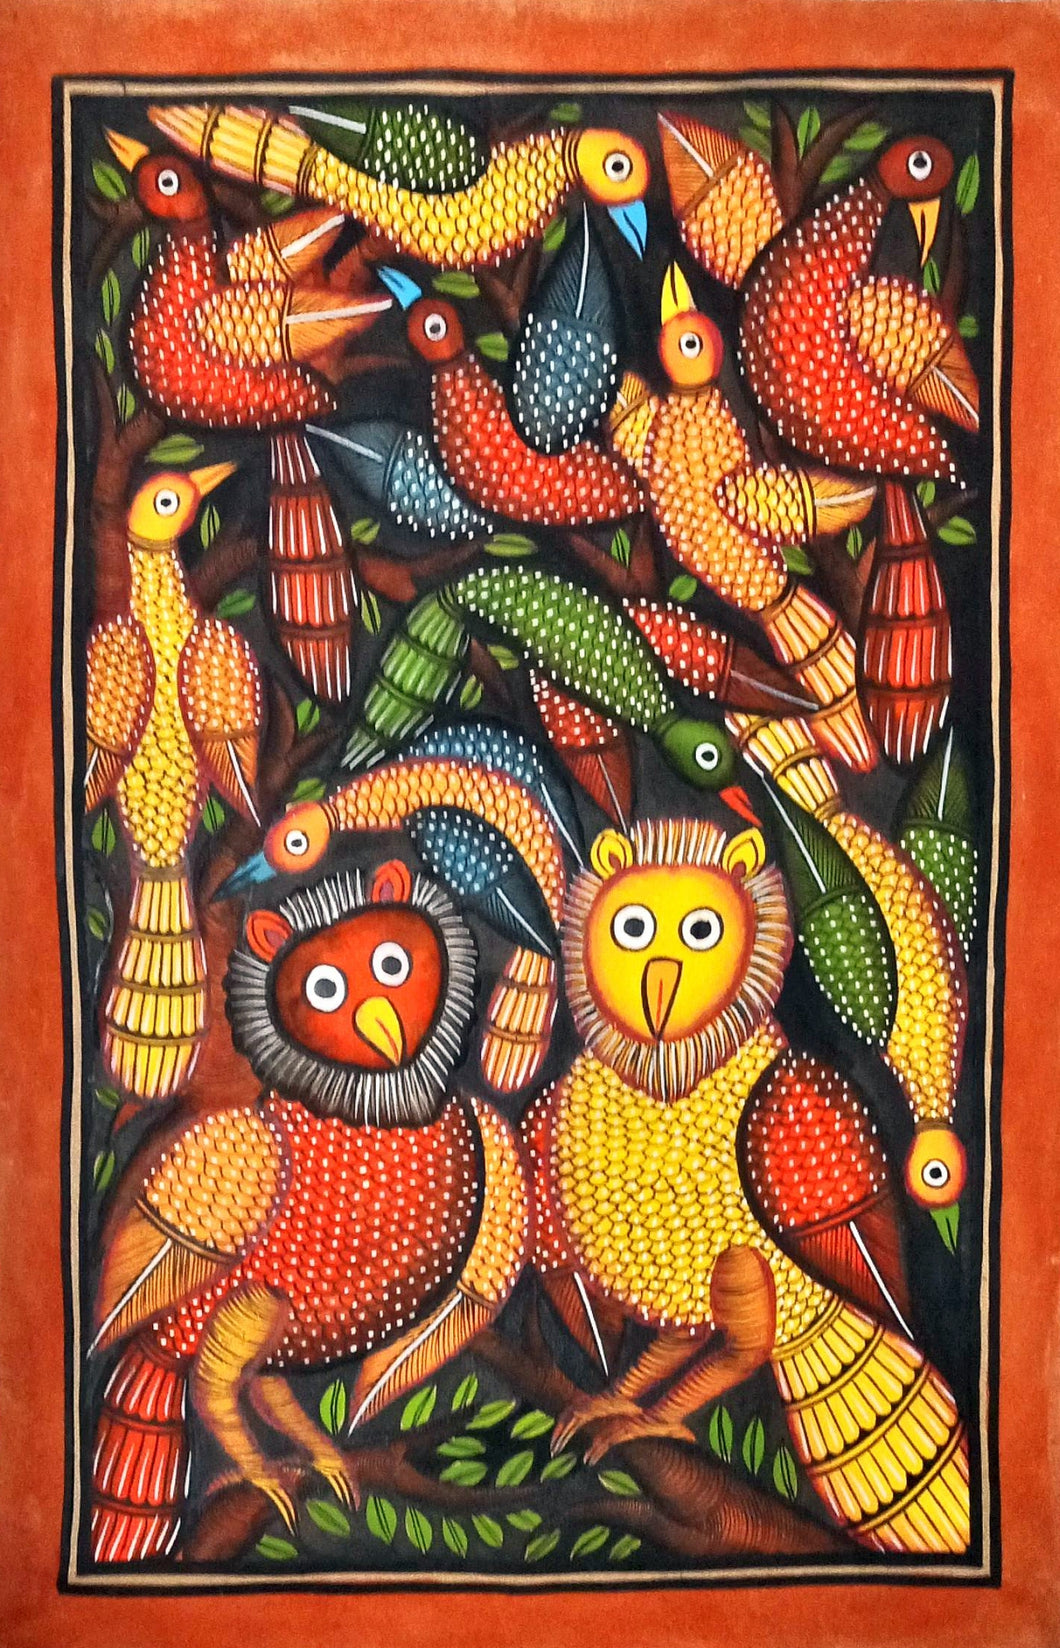 Birds of the Night 4 : Midnapore patachitra painting by Layala Chitrakar